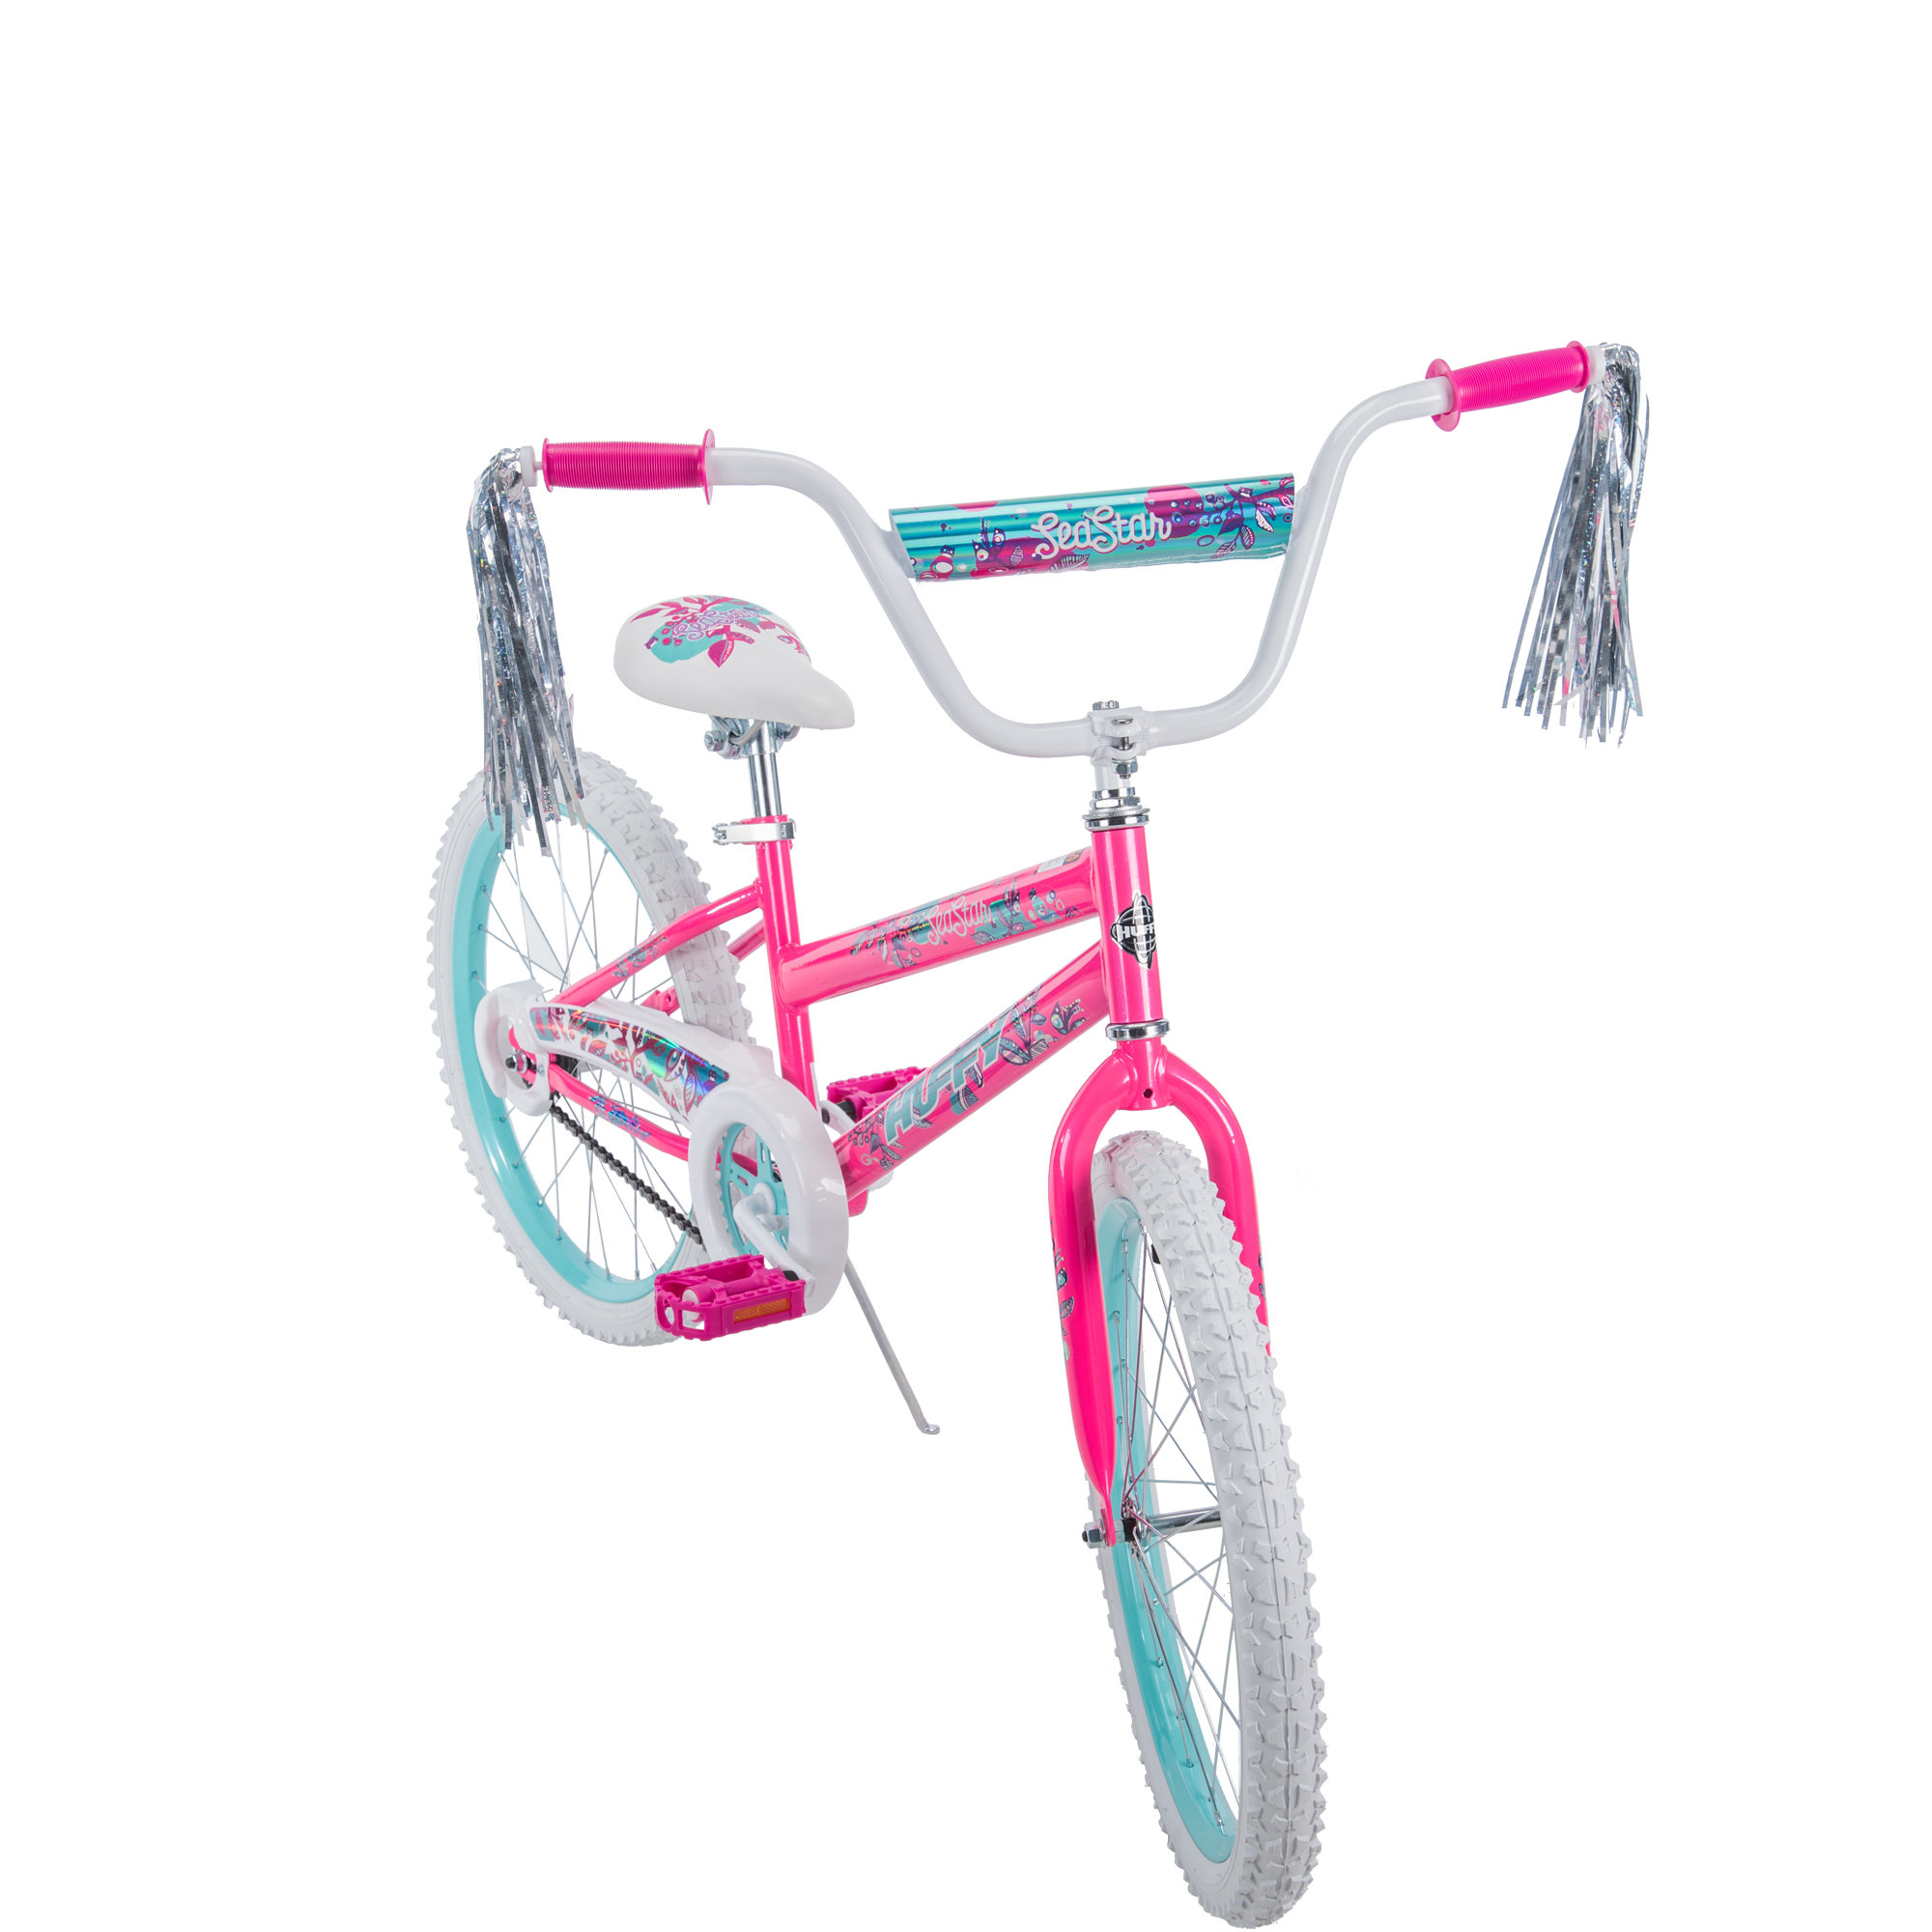 20" Huffy Girls' Sea Star Bike, Pink - image 3 of 6